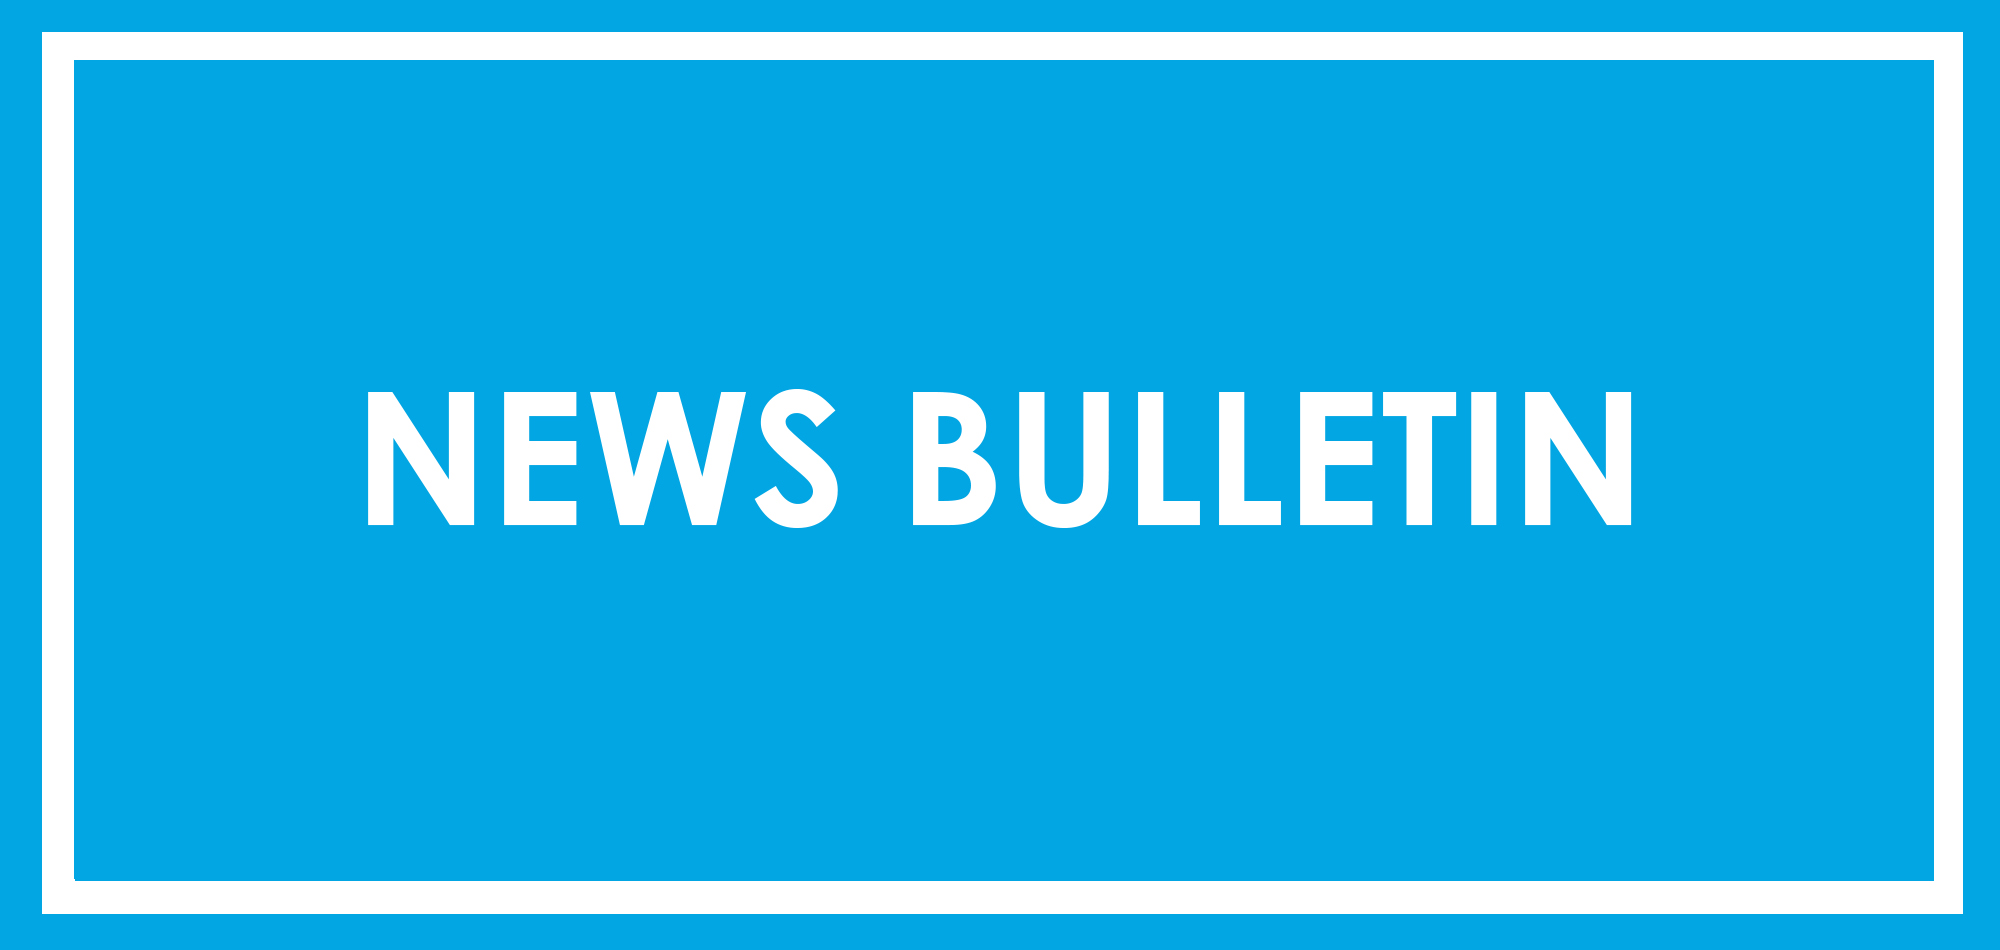 News Bulletin - 10.08.20